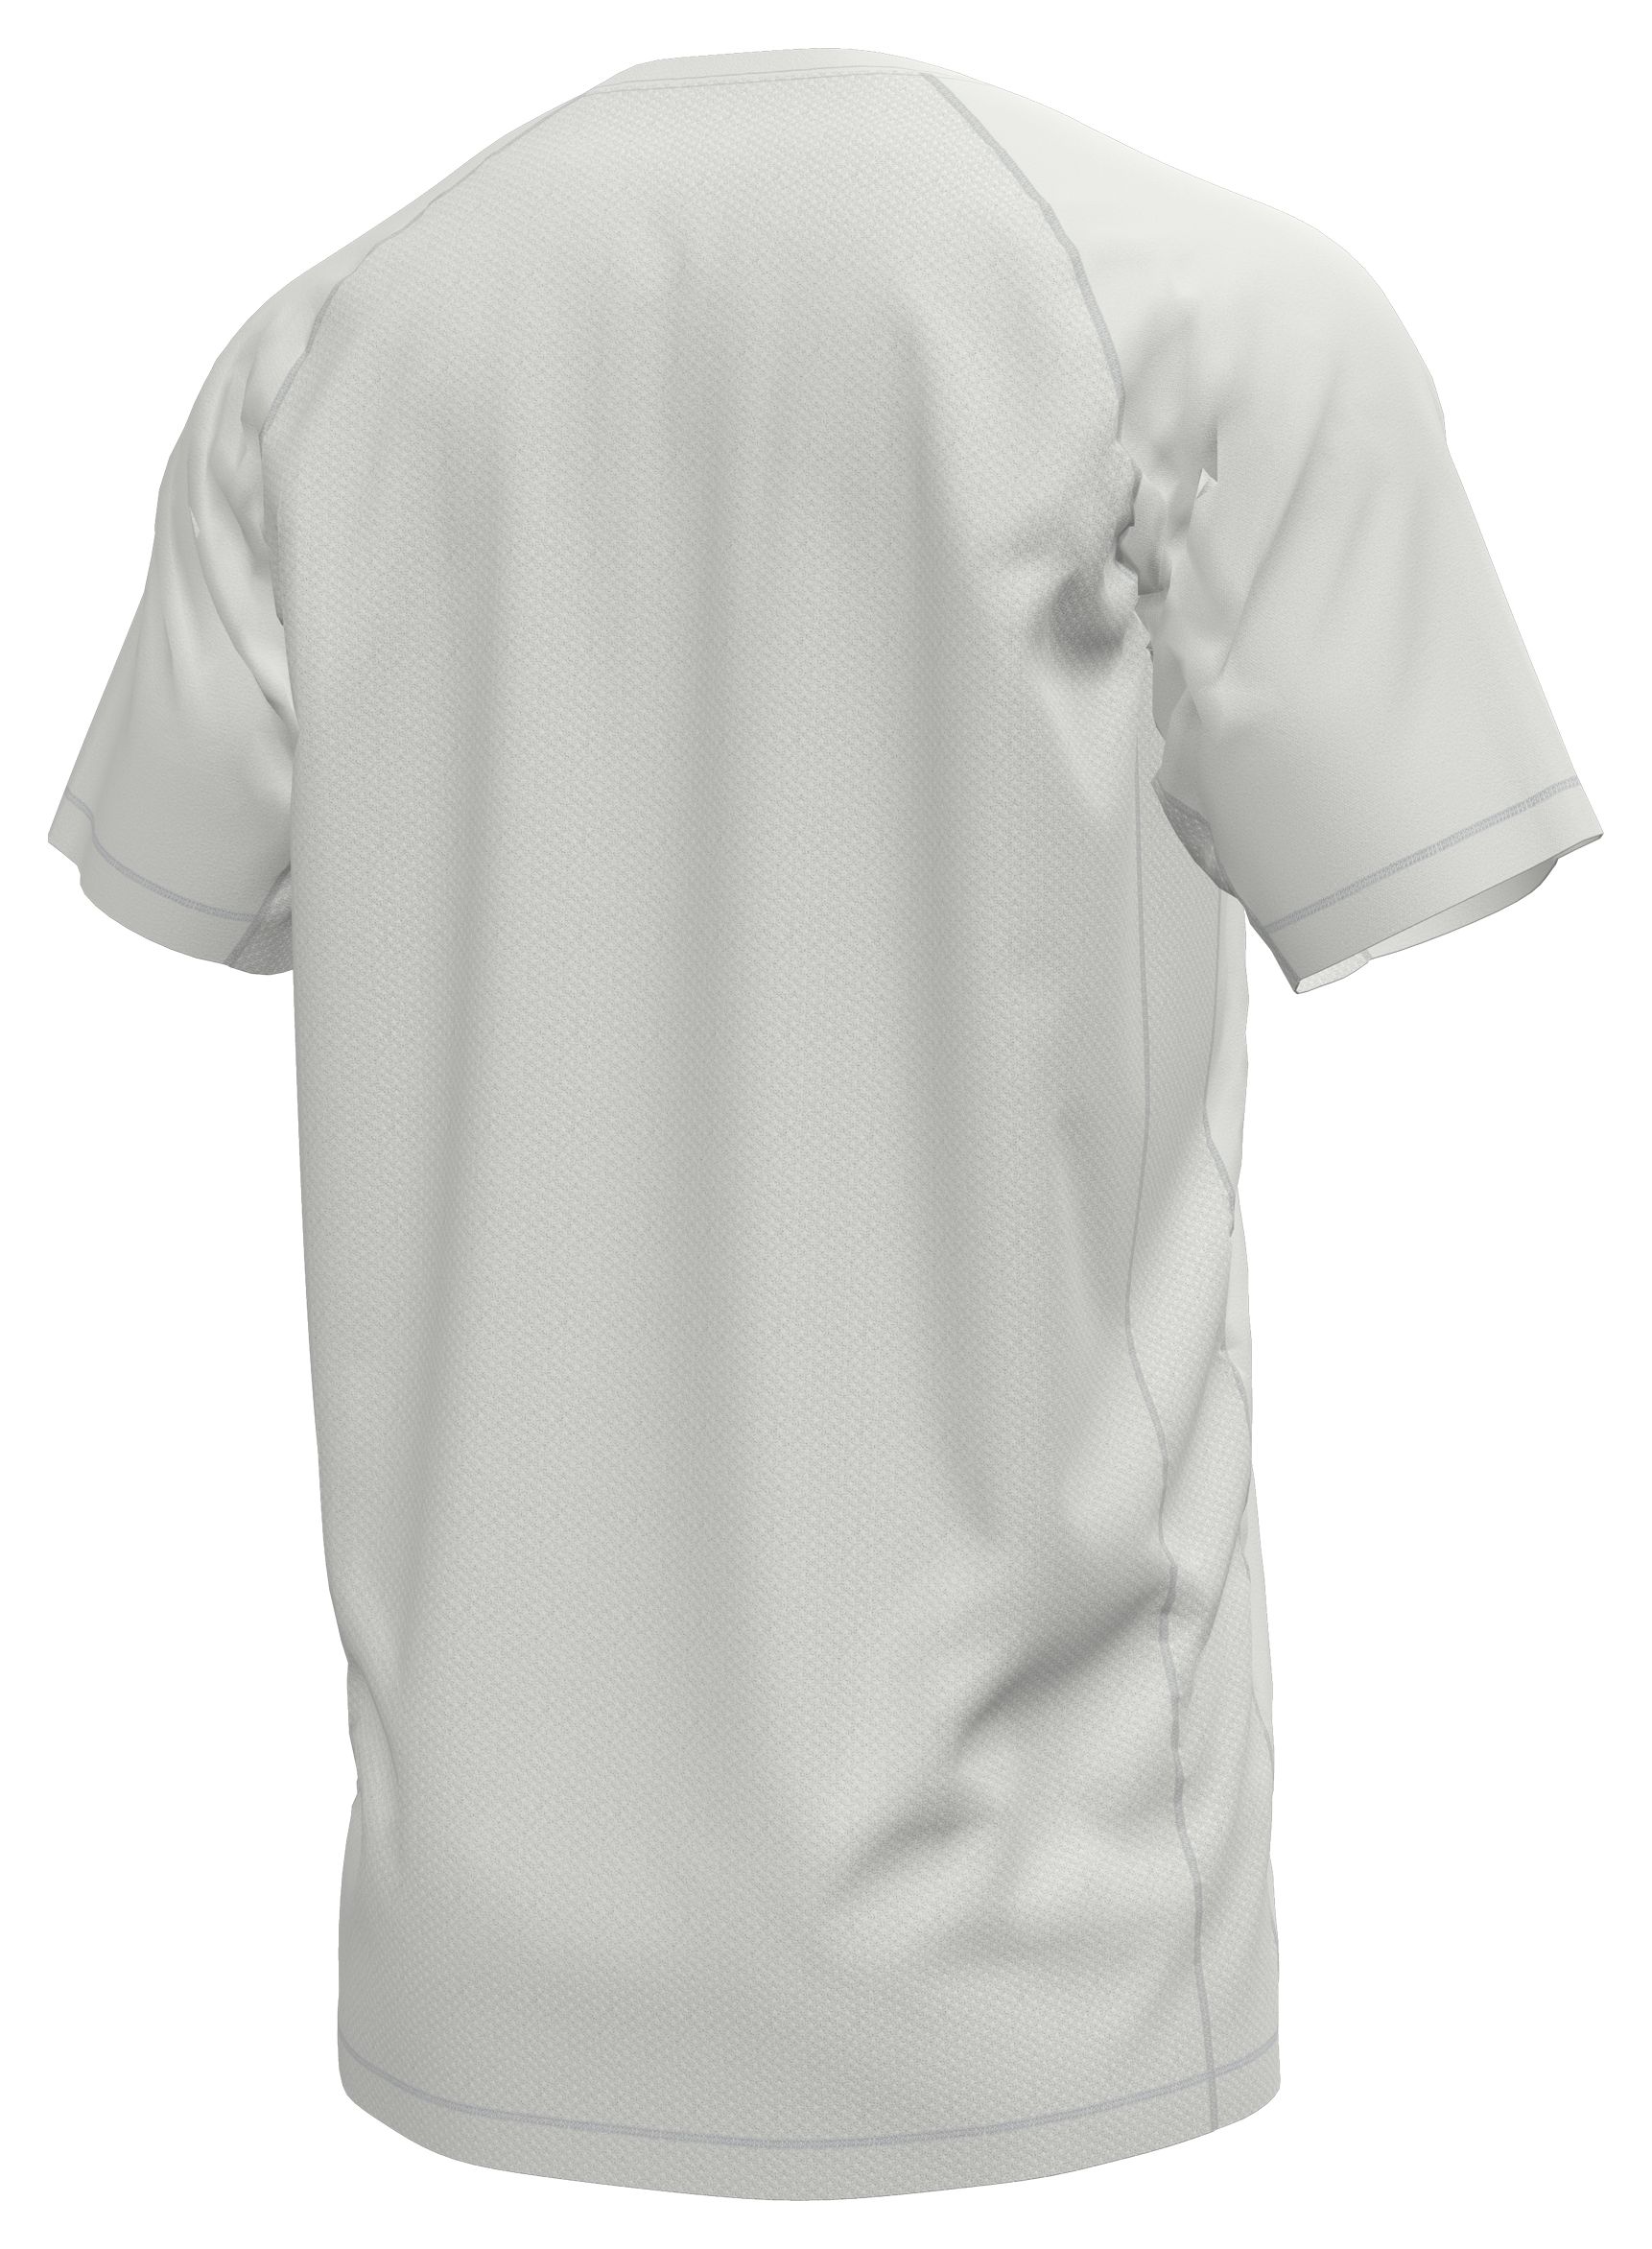 NFL Men's T-Shirt Raglan Baseball 3/4 Long Sleeve Tee Shirt, Team Logo Color